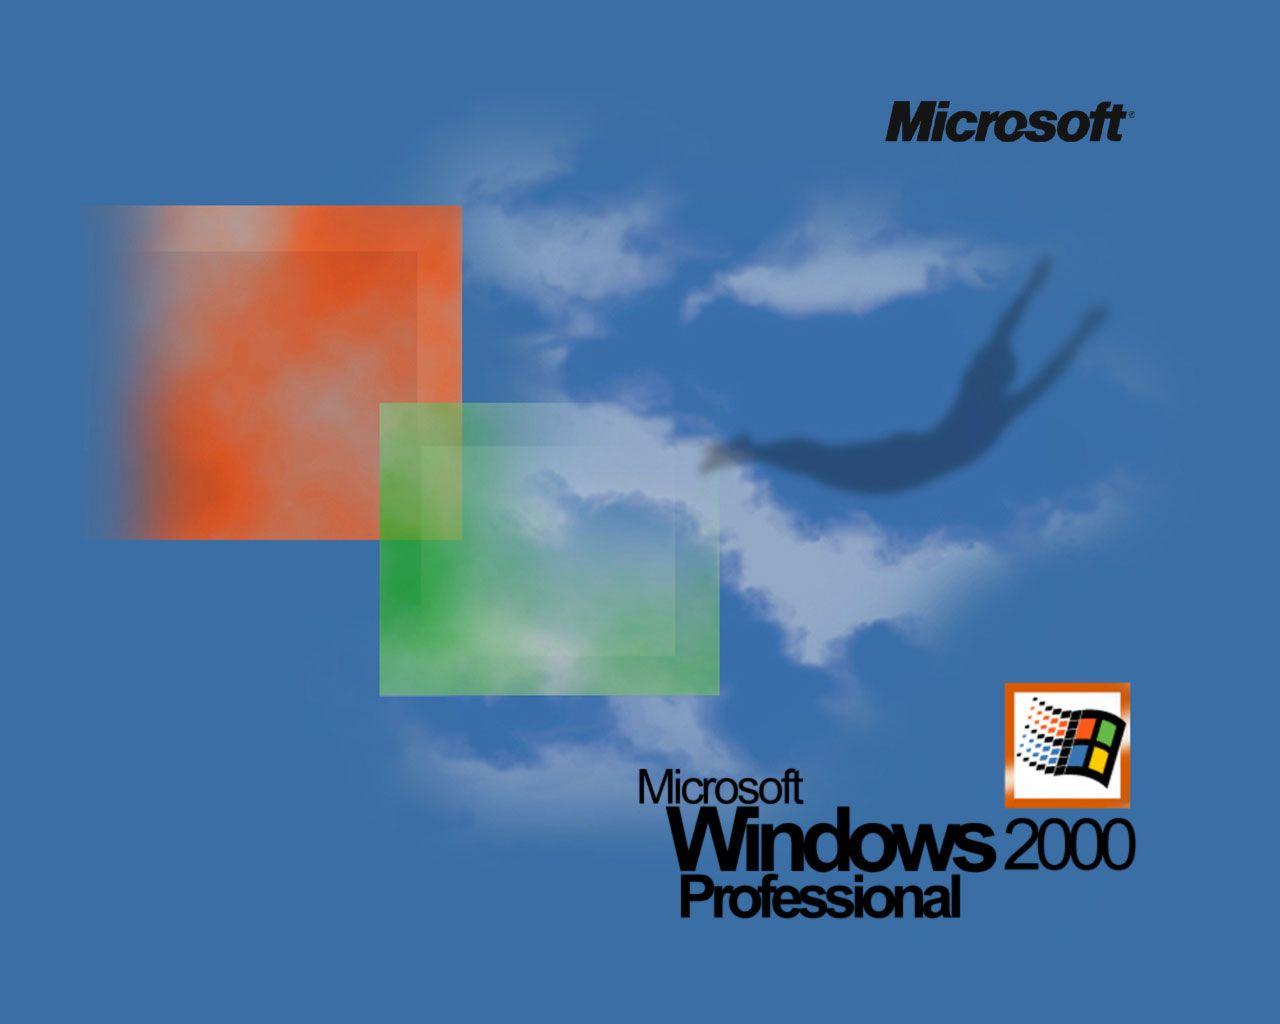 Windows 2000 Professional Logo - Windows Wallpaper | Just For You Forever: Windows 2000 Professional ...